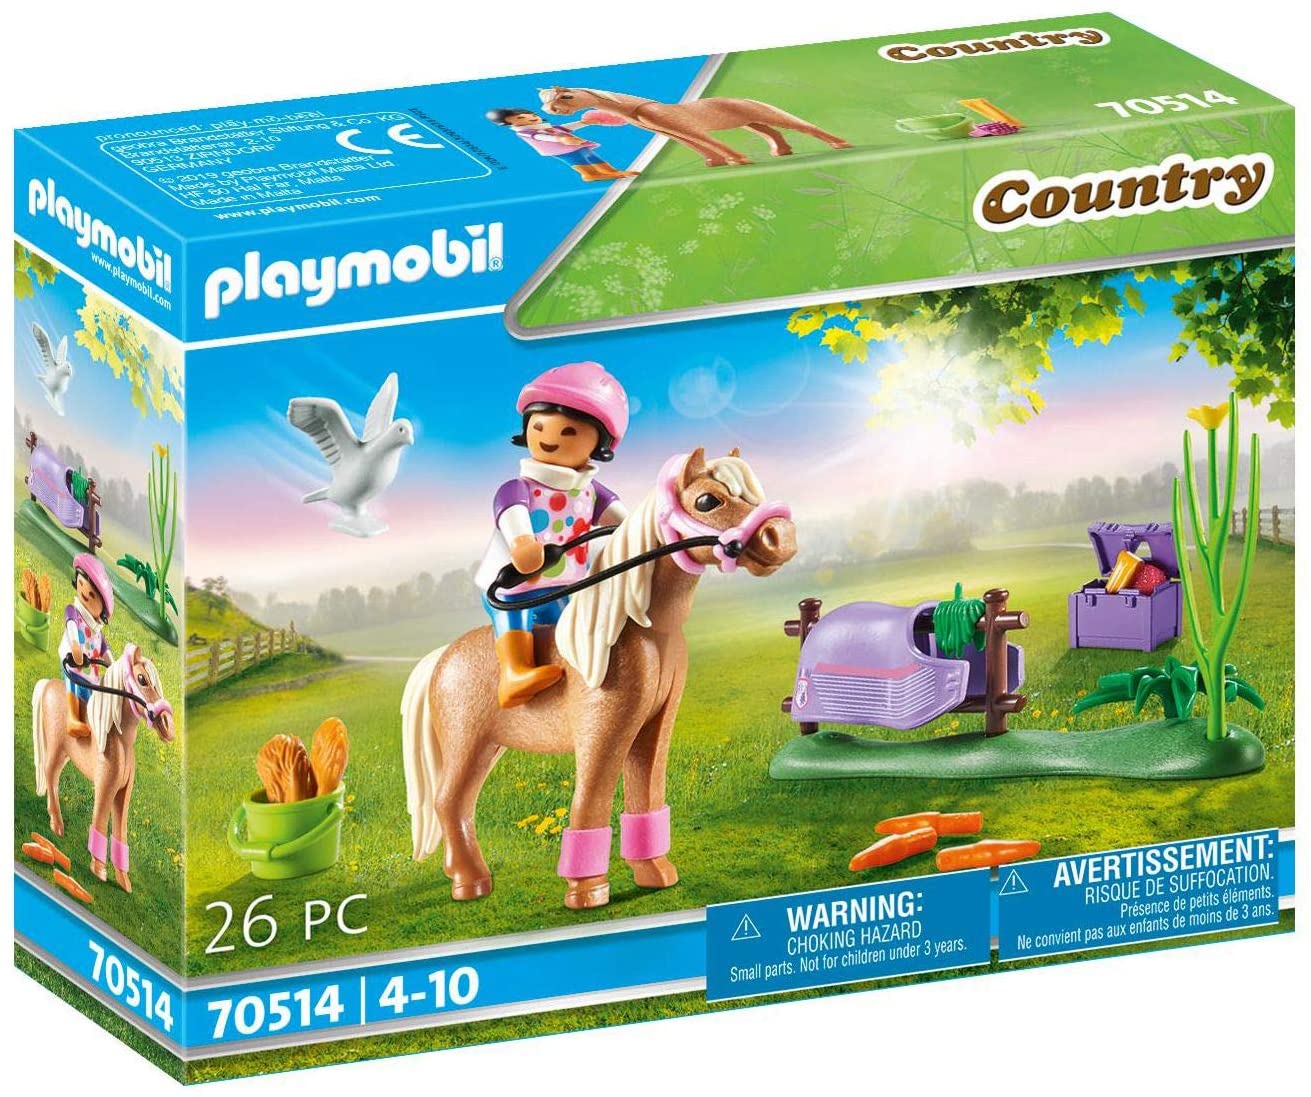 70514 Pony Icelandic Playmobil toysvaldichiana.it 